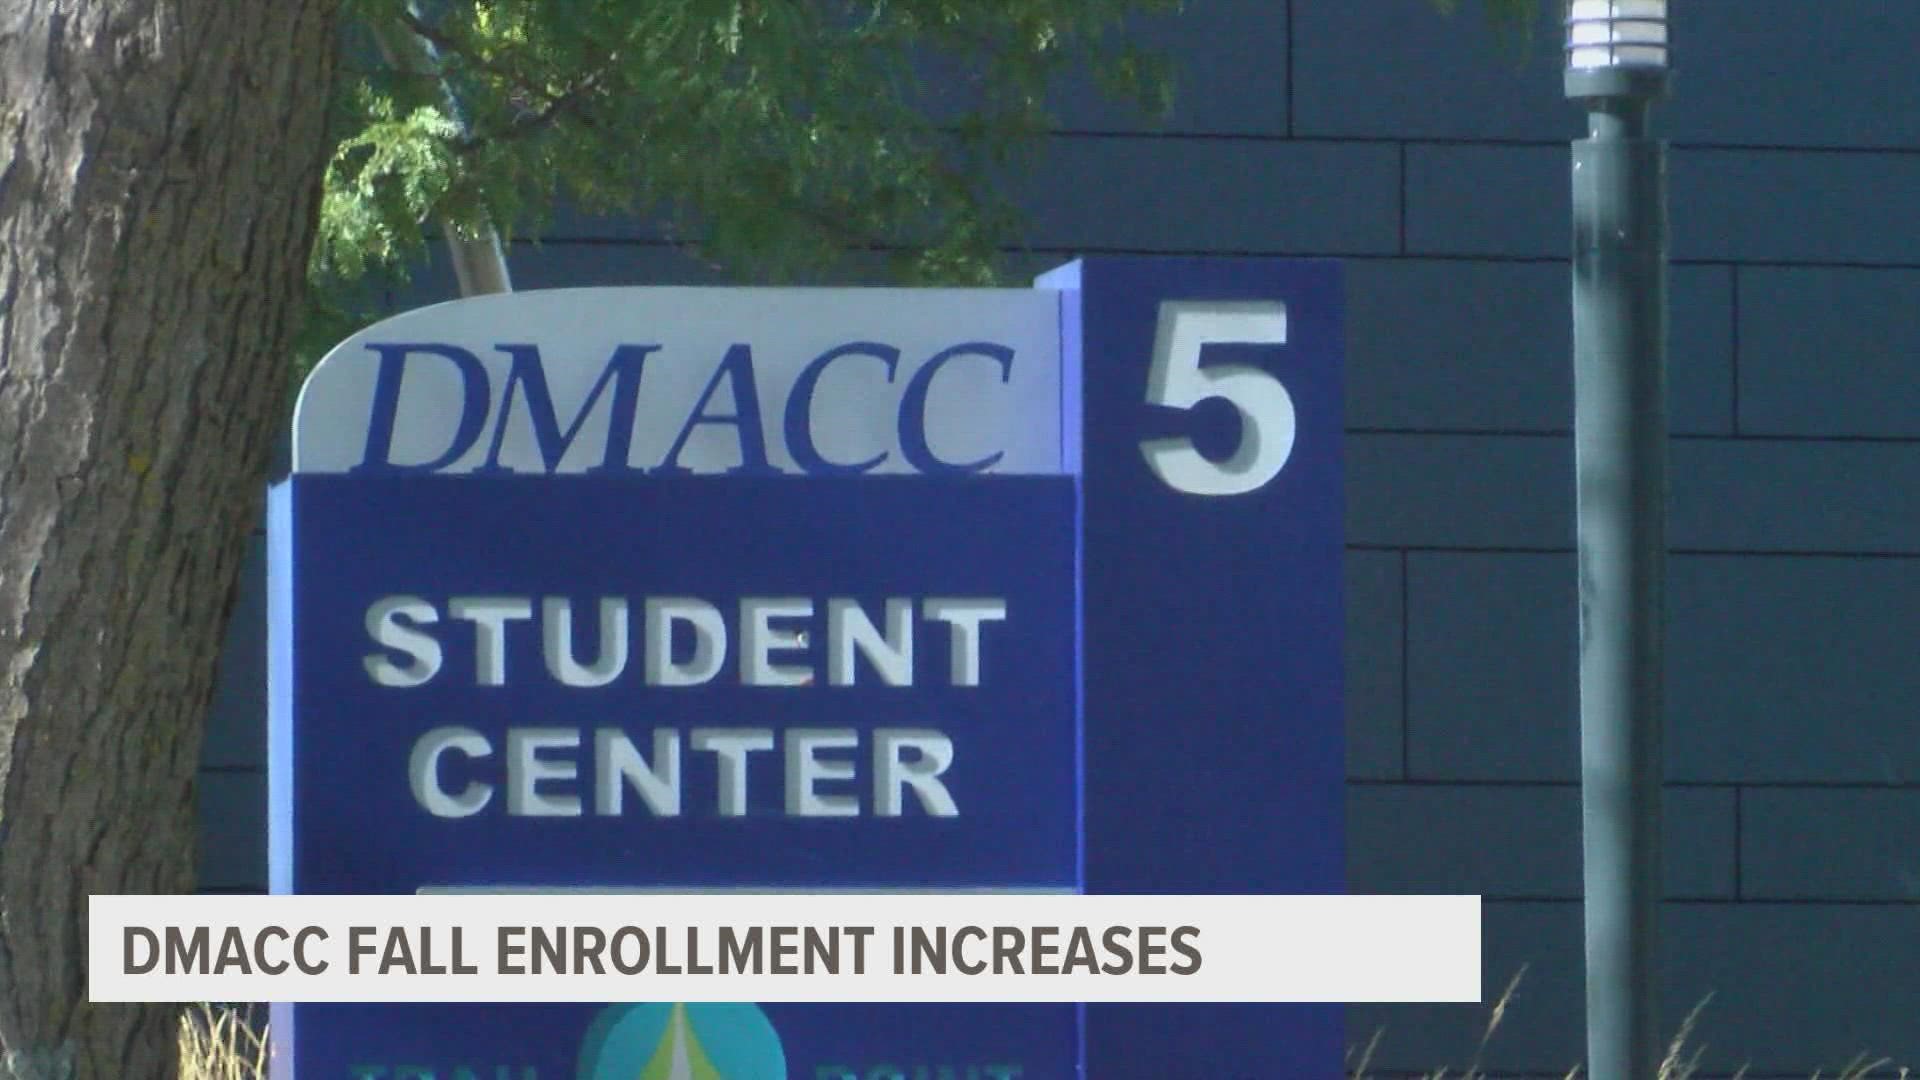 DMACC sees increase in fall enrollment